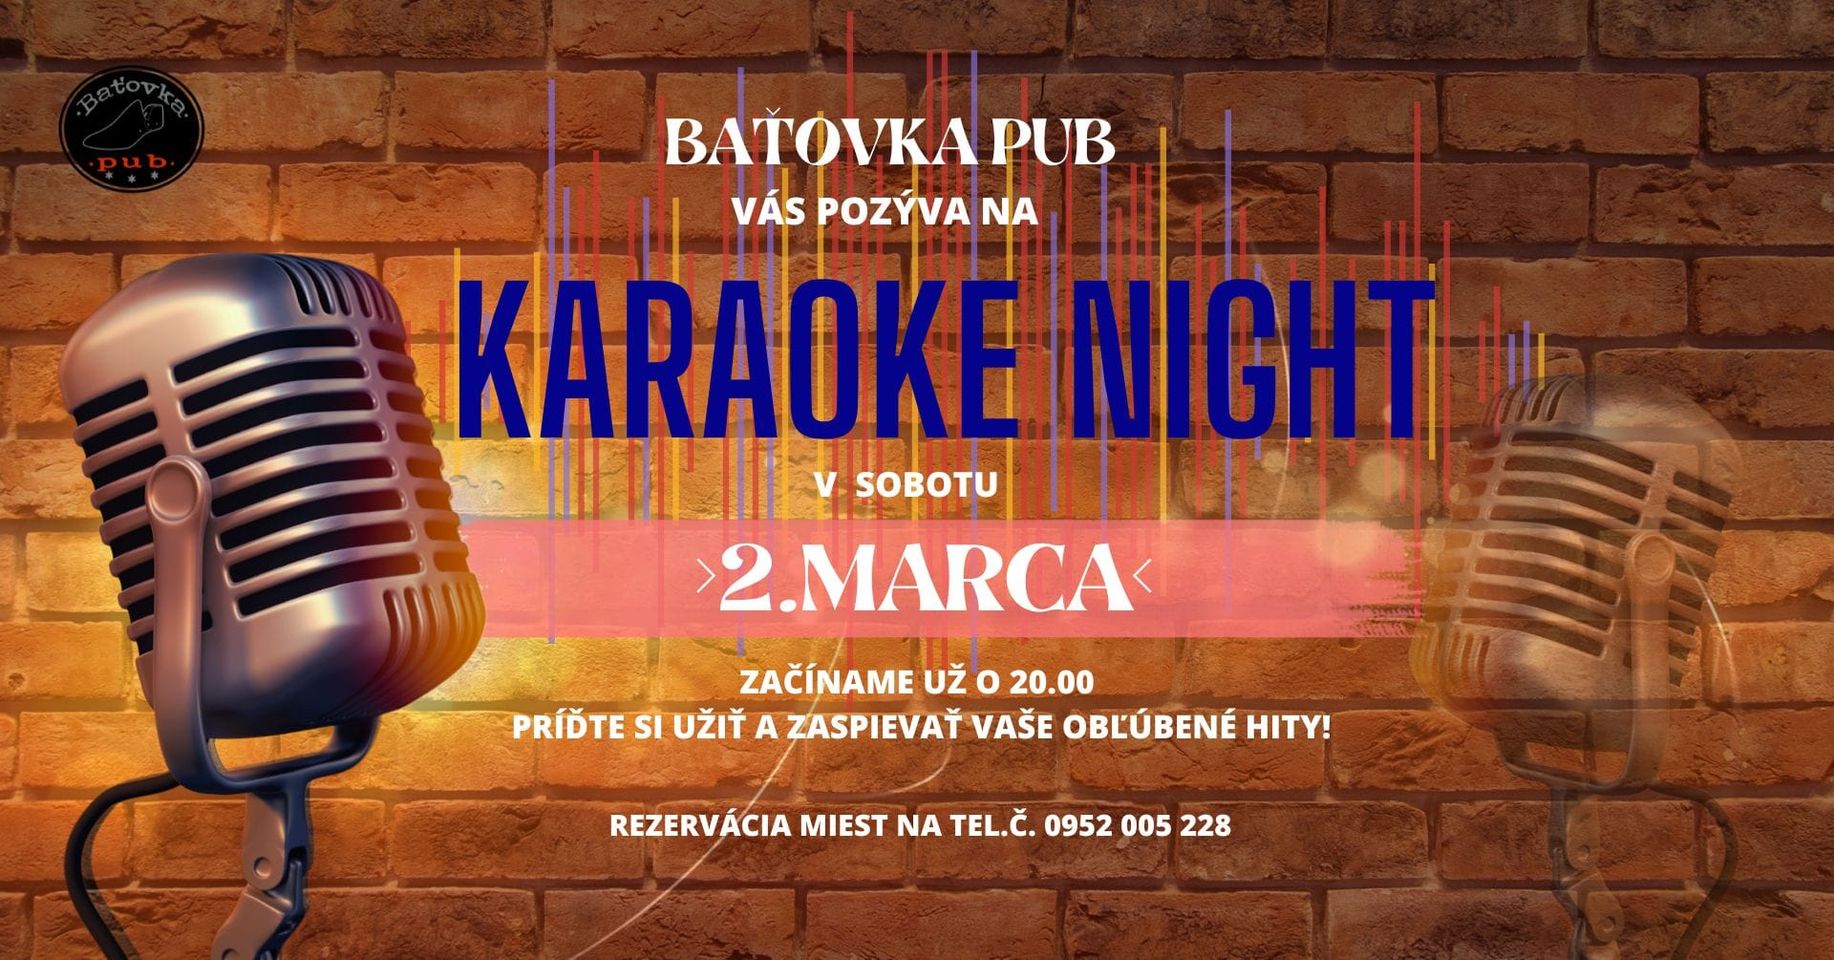 Karaoke night @ Baťovka pub